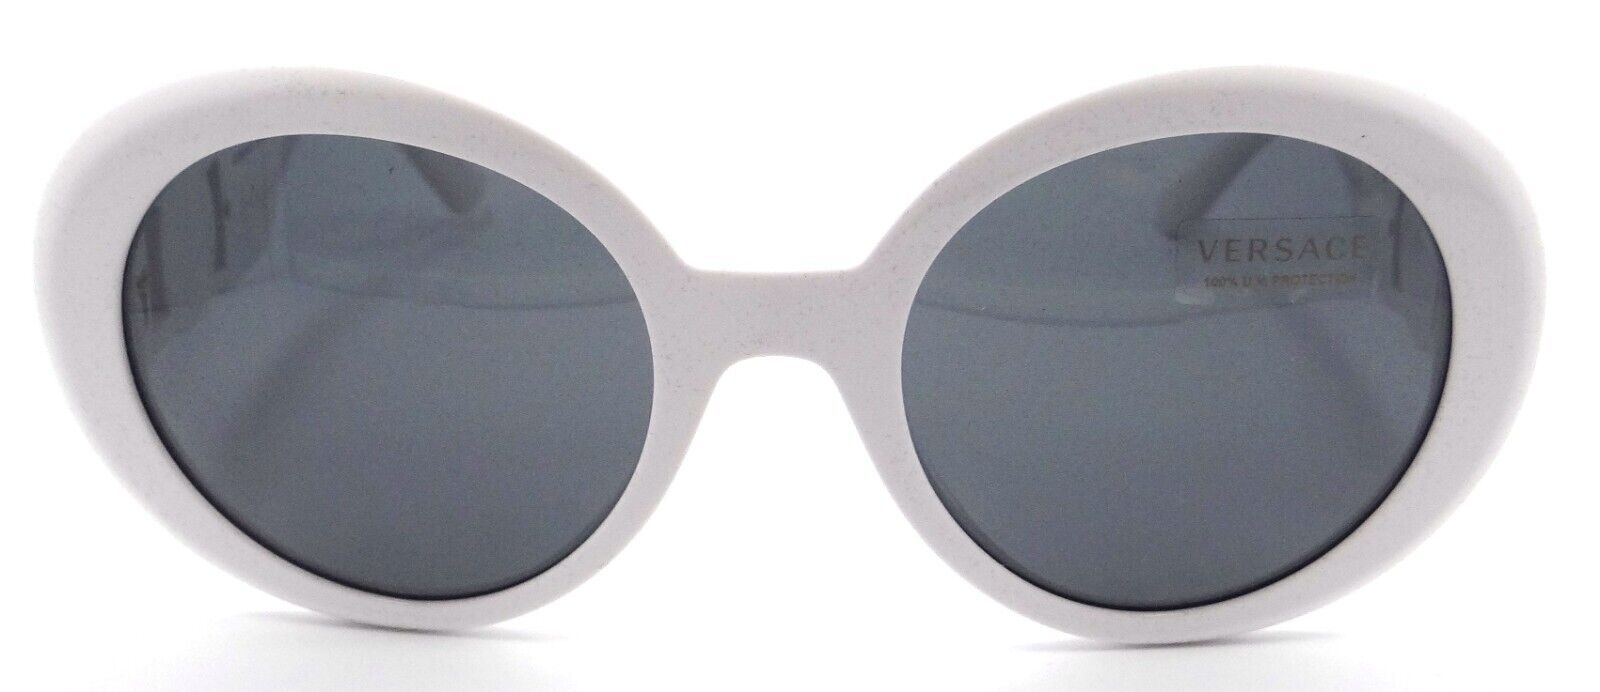 Versace Sunglasses VE 4414 314/87 55-22-145 White / Dark Grey Made in Italy-8056597618151-classypw.com-2